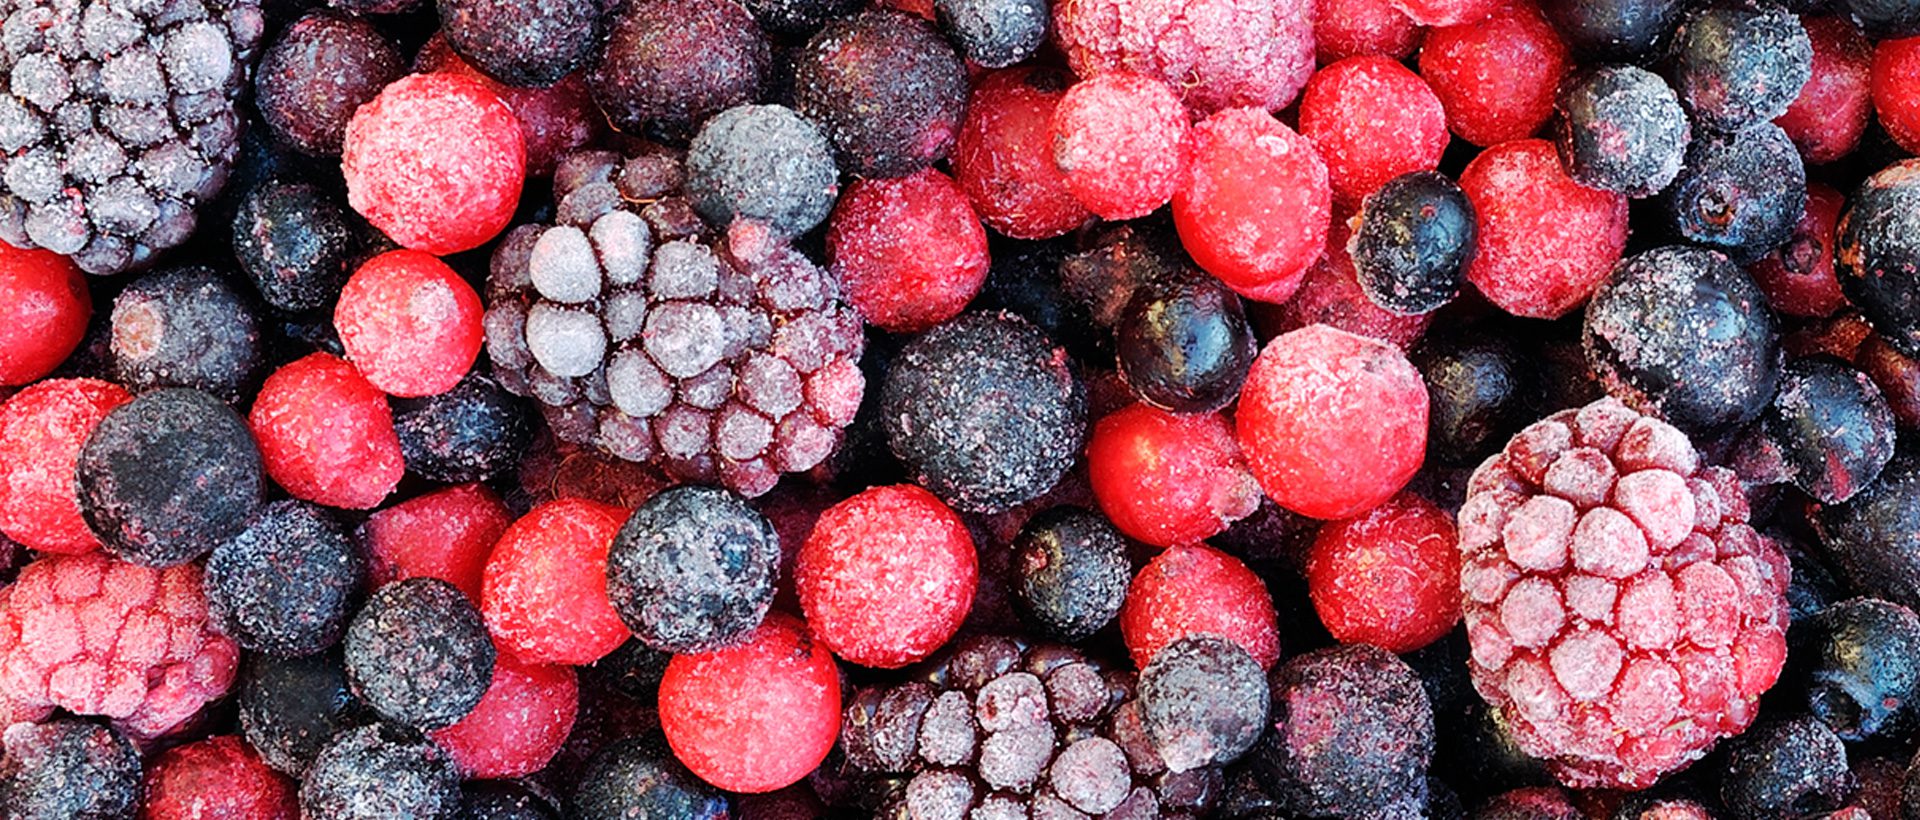 Sådan bør du behandle frosne bær